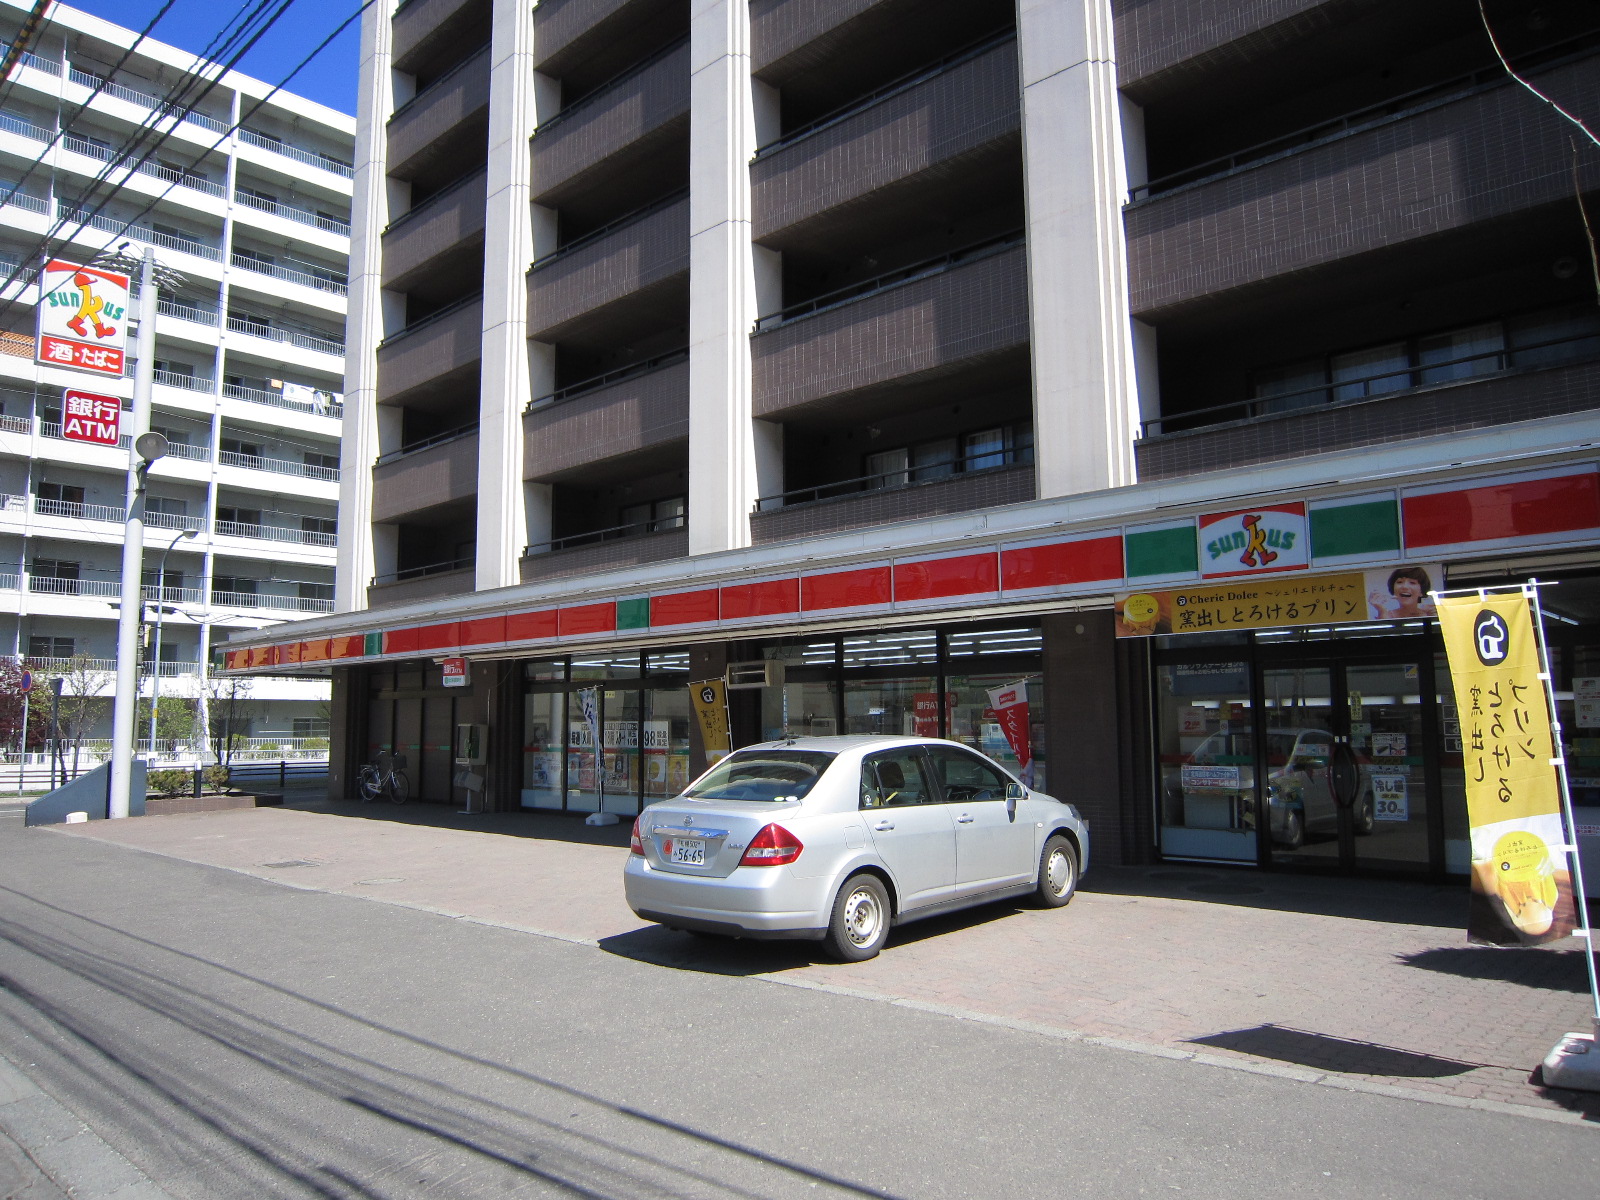 Convenience store. 150m until Thanksgiving Kikusui Article 1 store (convenience store)